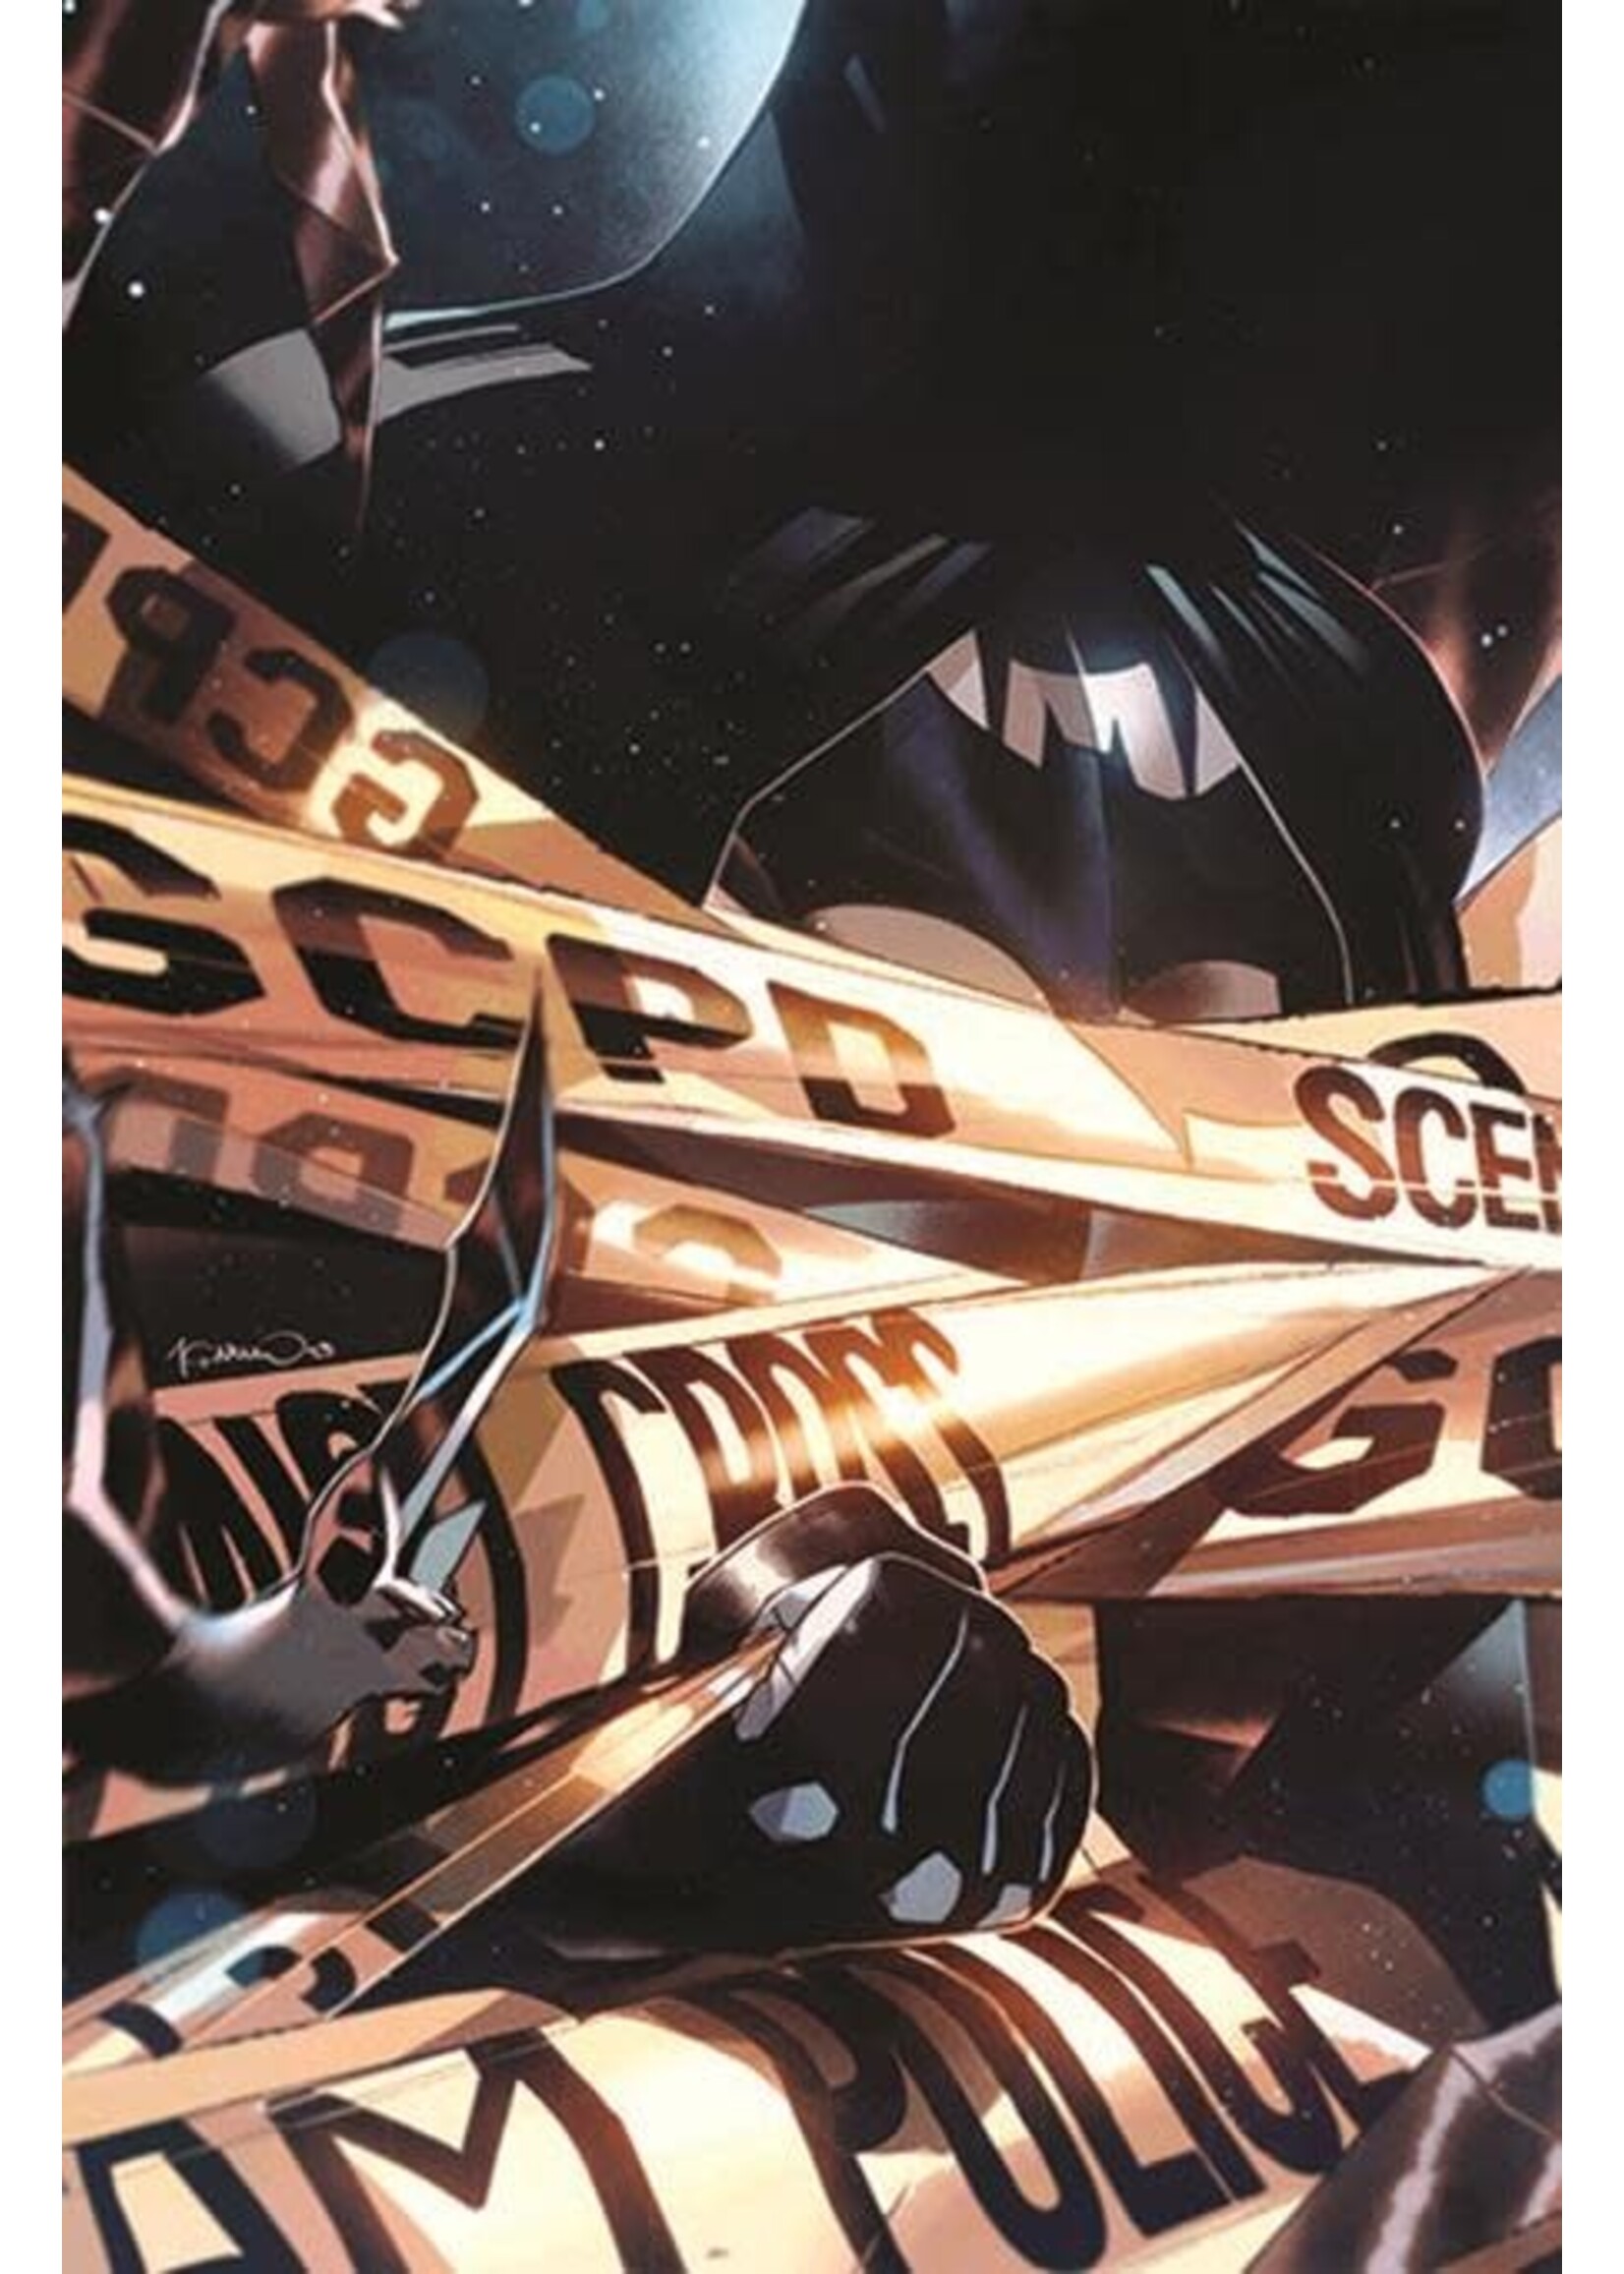 DC COMICS BATMAN THE BRAVE AND THE BOLD #11